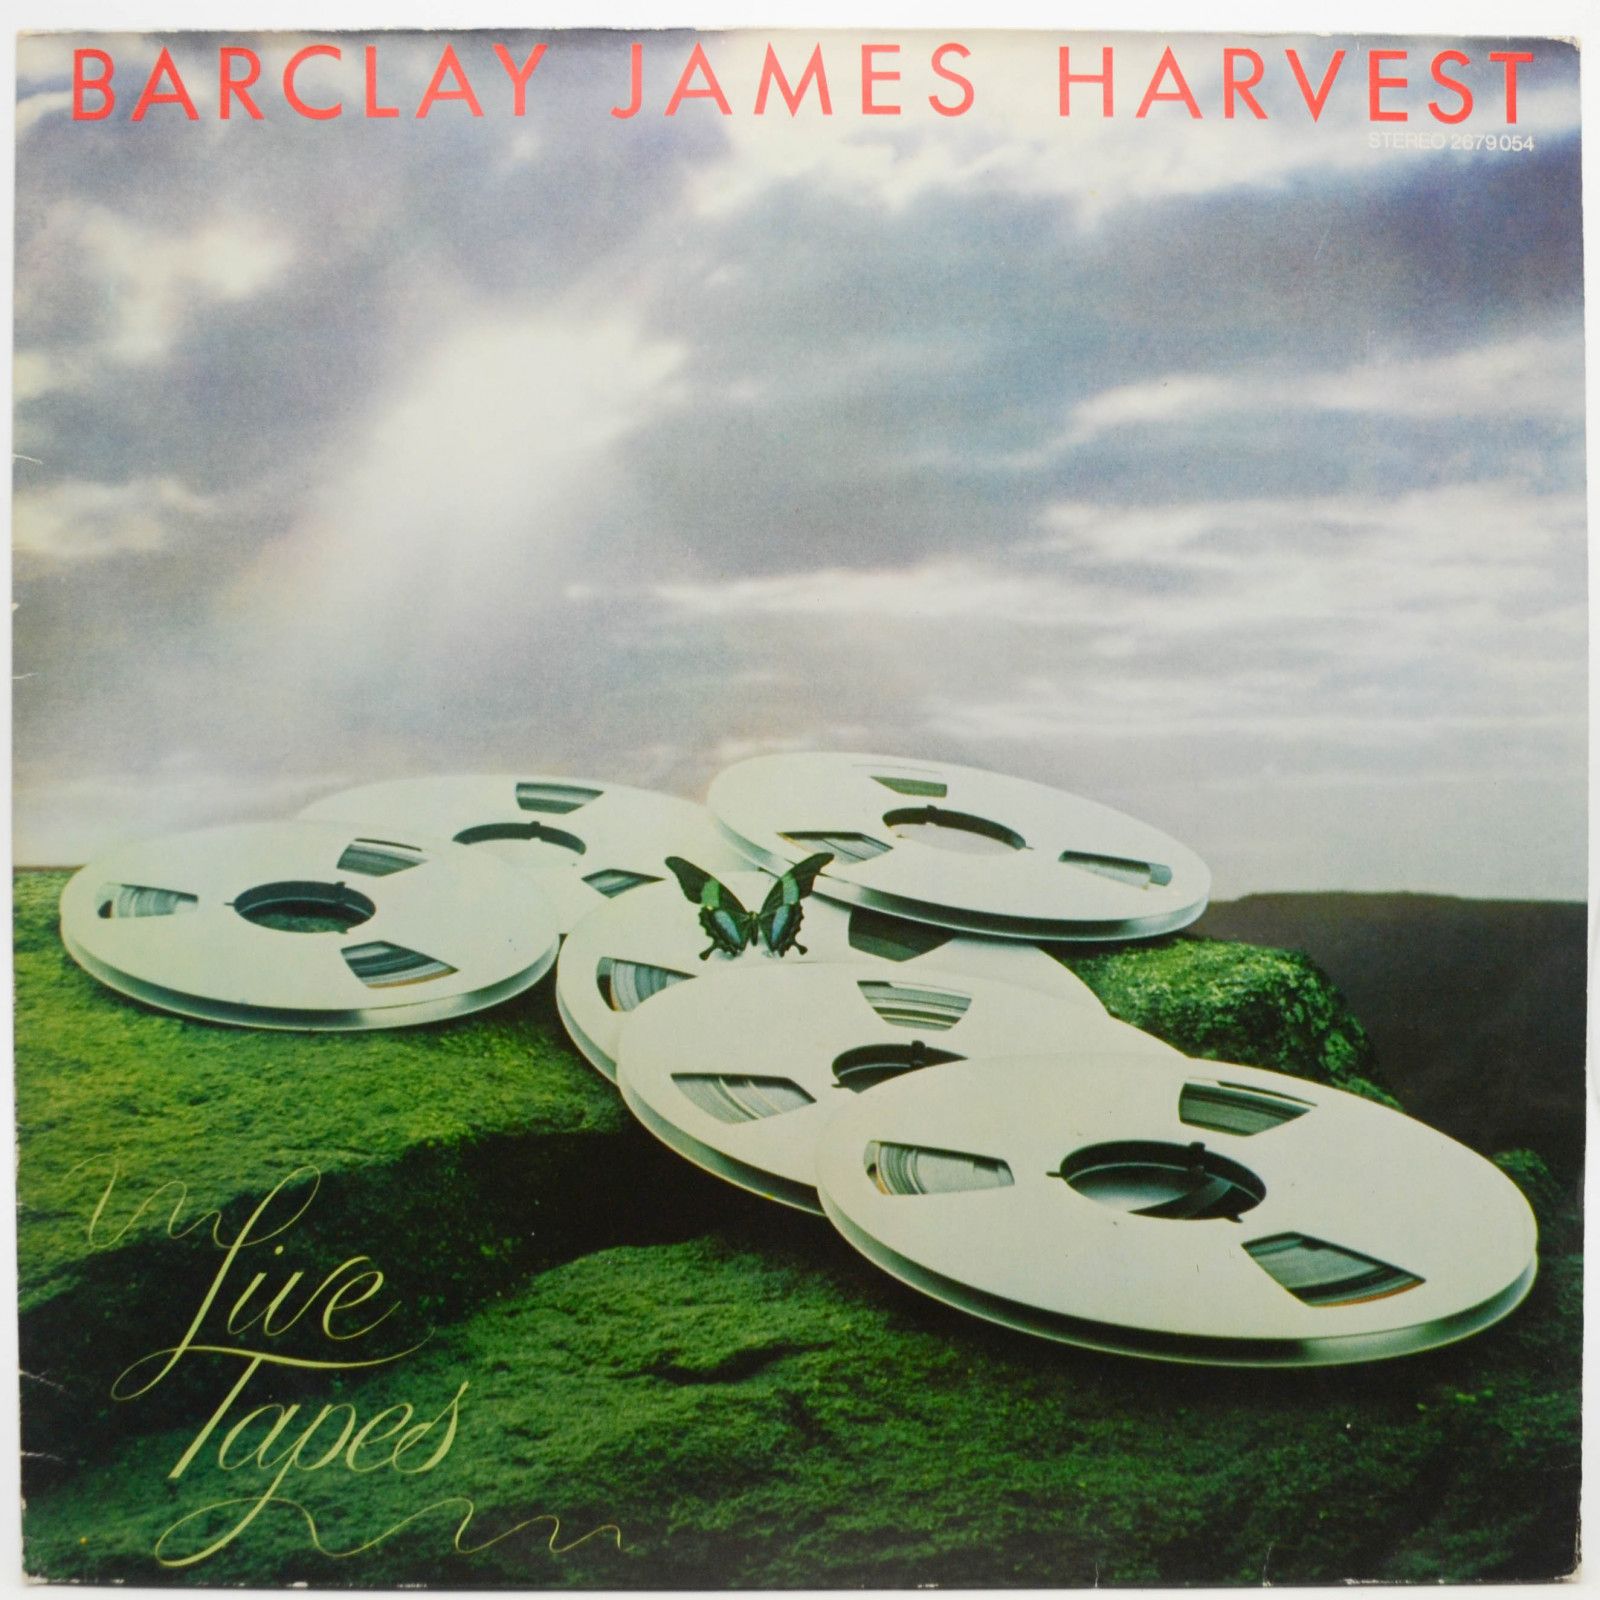 Barclay James Harvest — Live Tapes (2LP), 1978